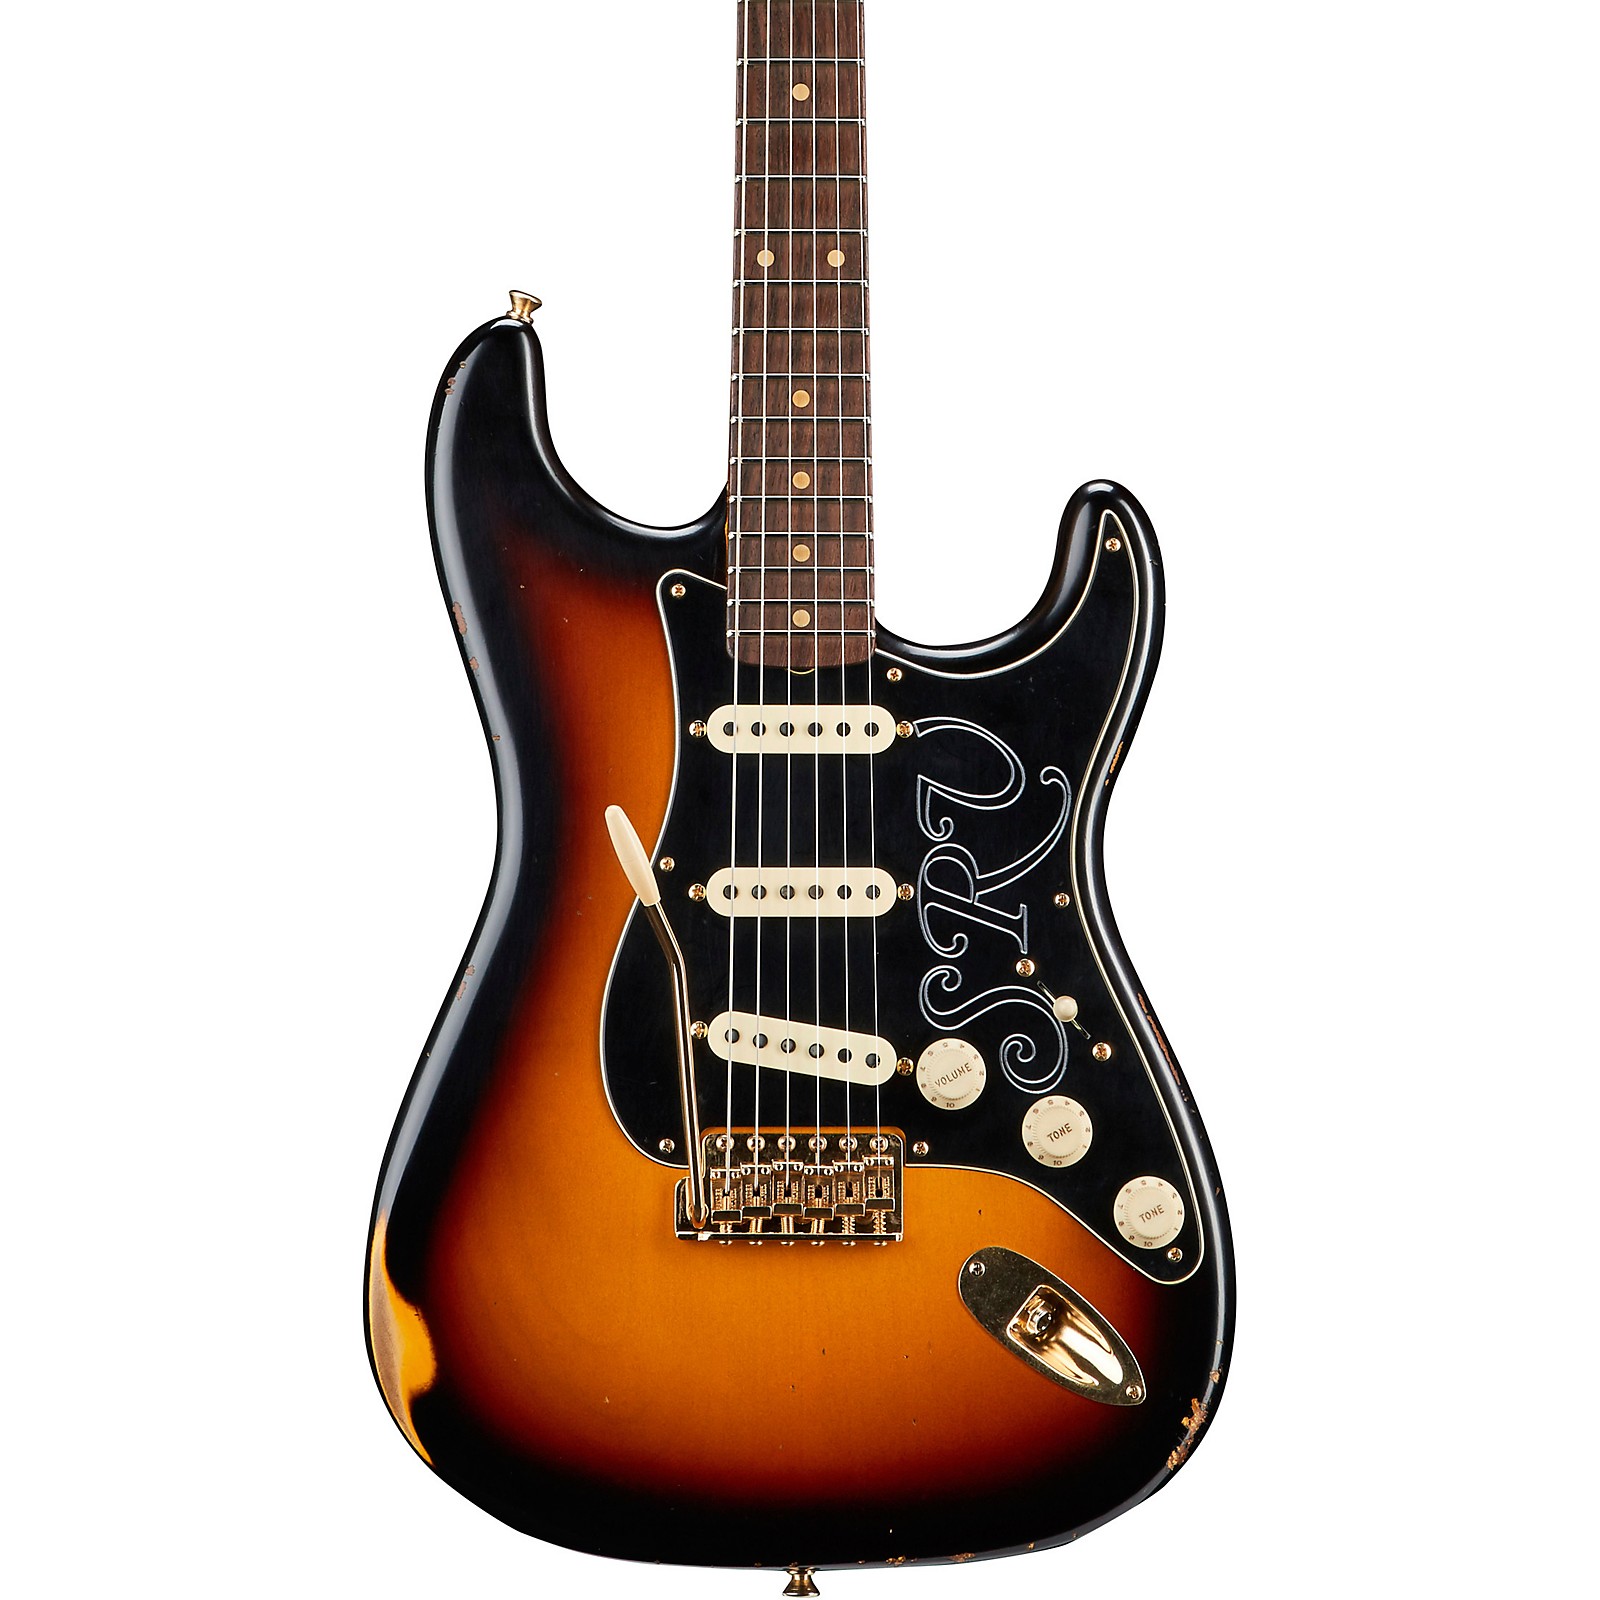 Keychain Guitar Fender Stevie Ray Vaughan Stratocaster